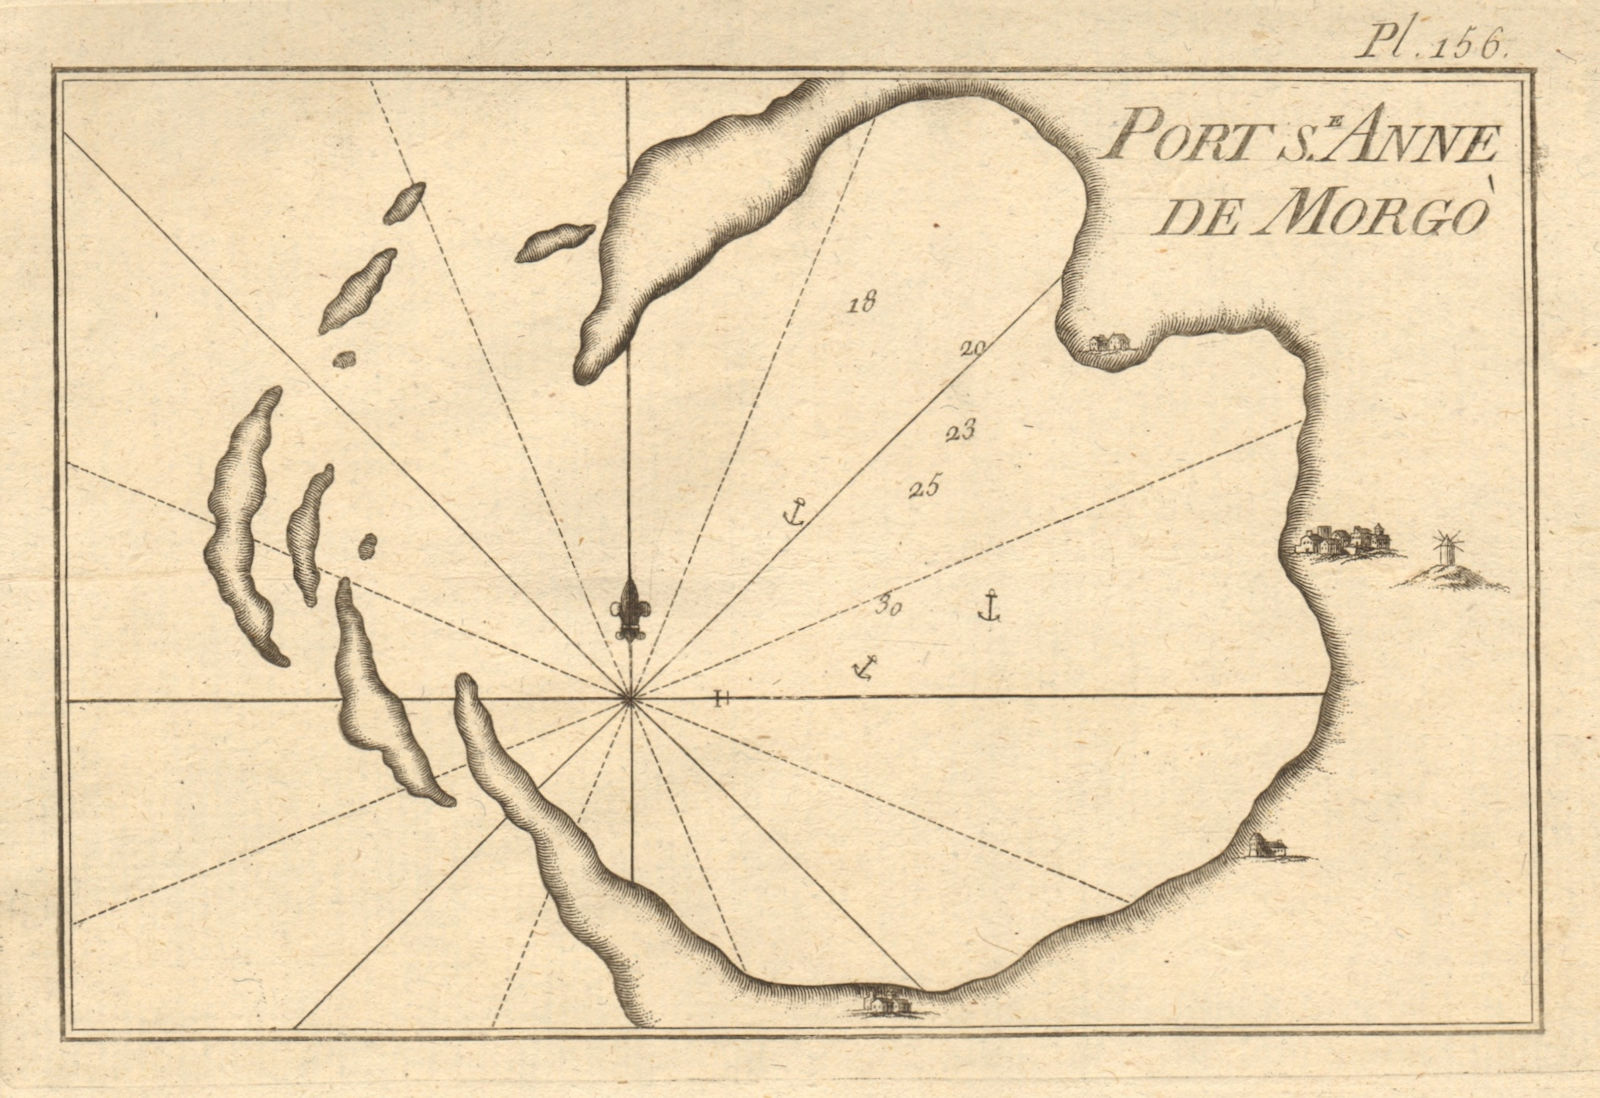 Associate Product St. Anne de Morgo. Katapola, Amorgos, Cyclades. Agia Anna. Greece. ROUX 1804 map